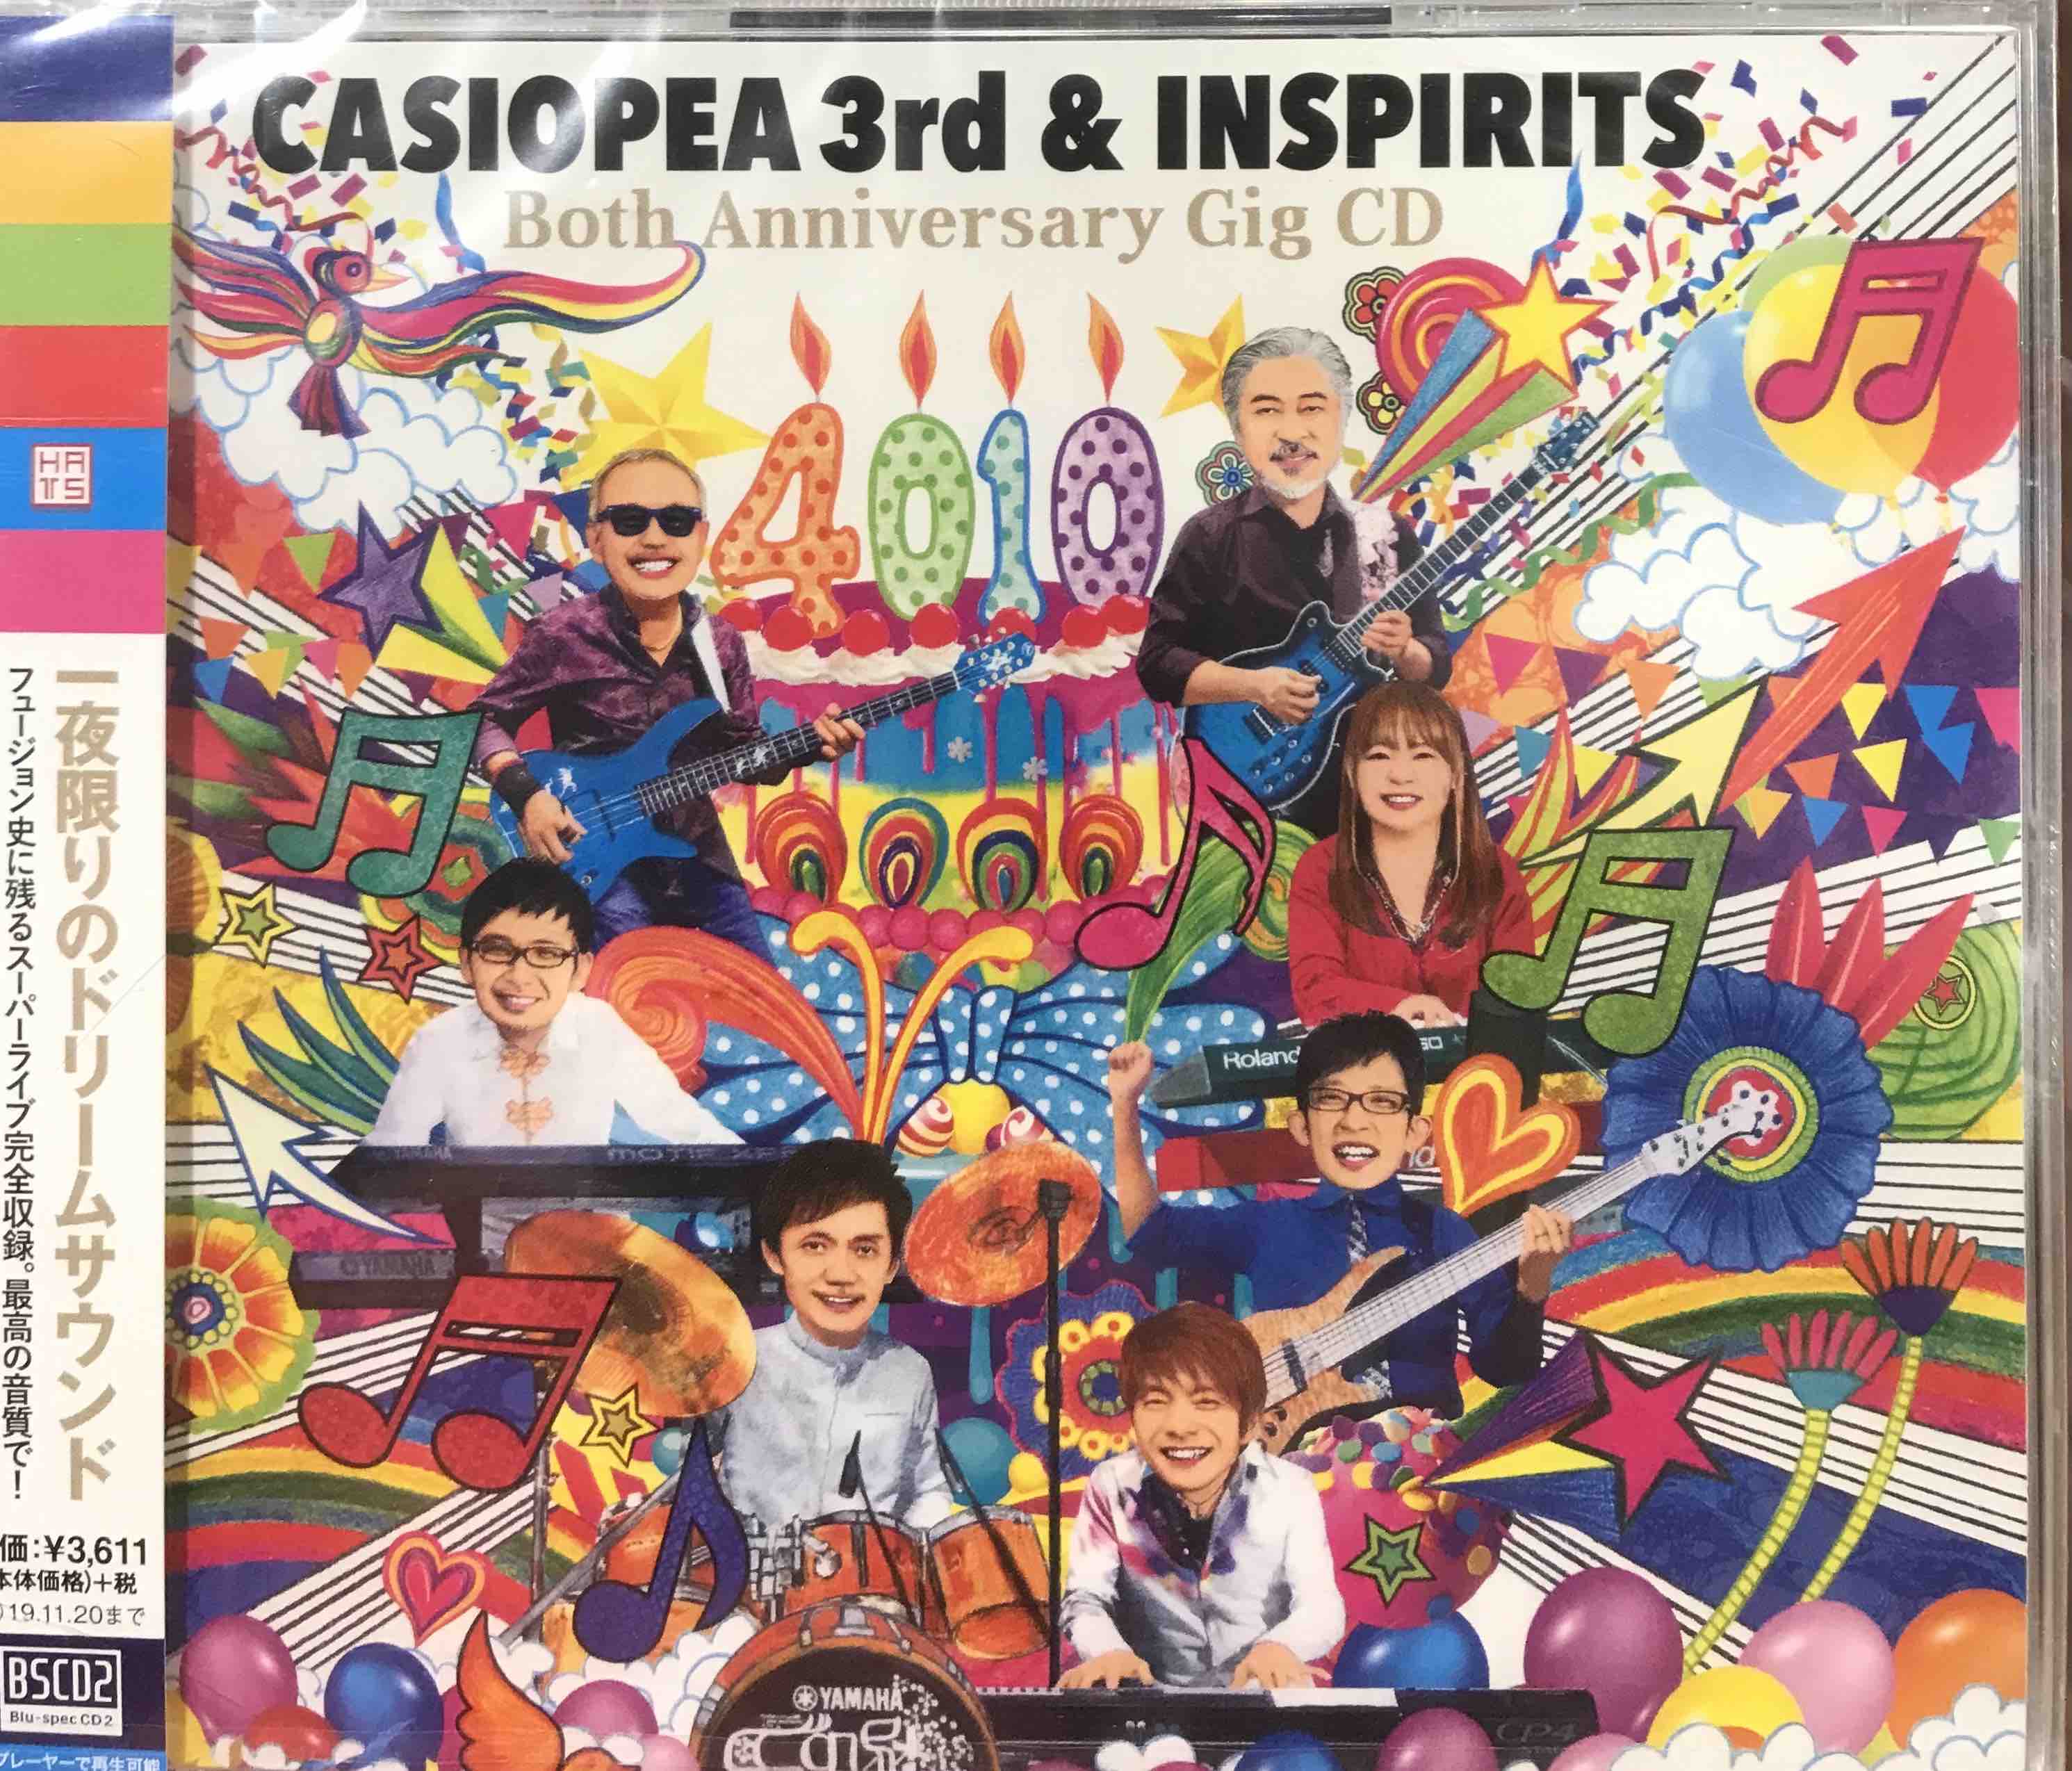 Casiopea 3rd & Inspirits ‎– 4010 (Both Anniversary Gig CD)